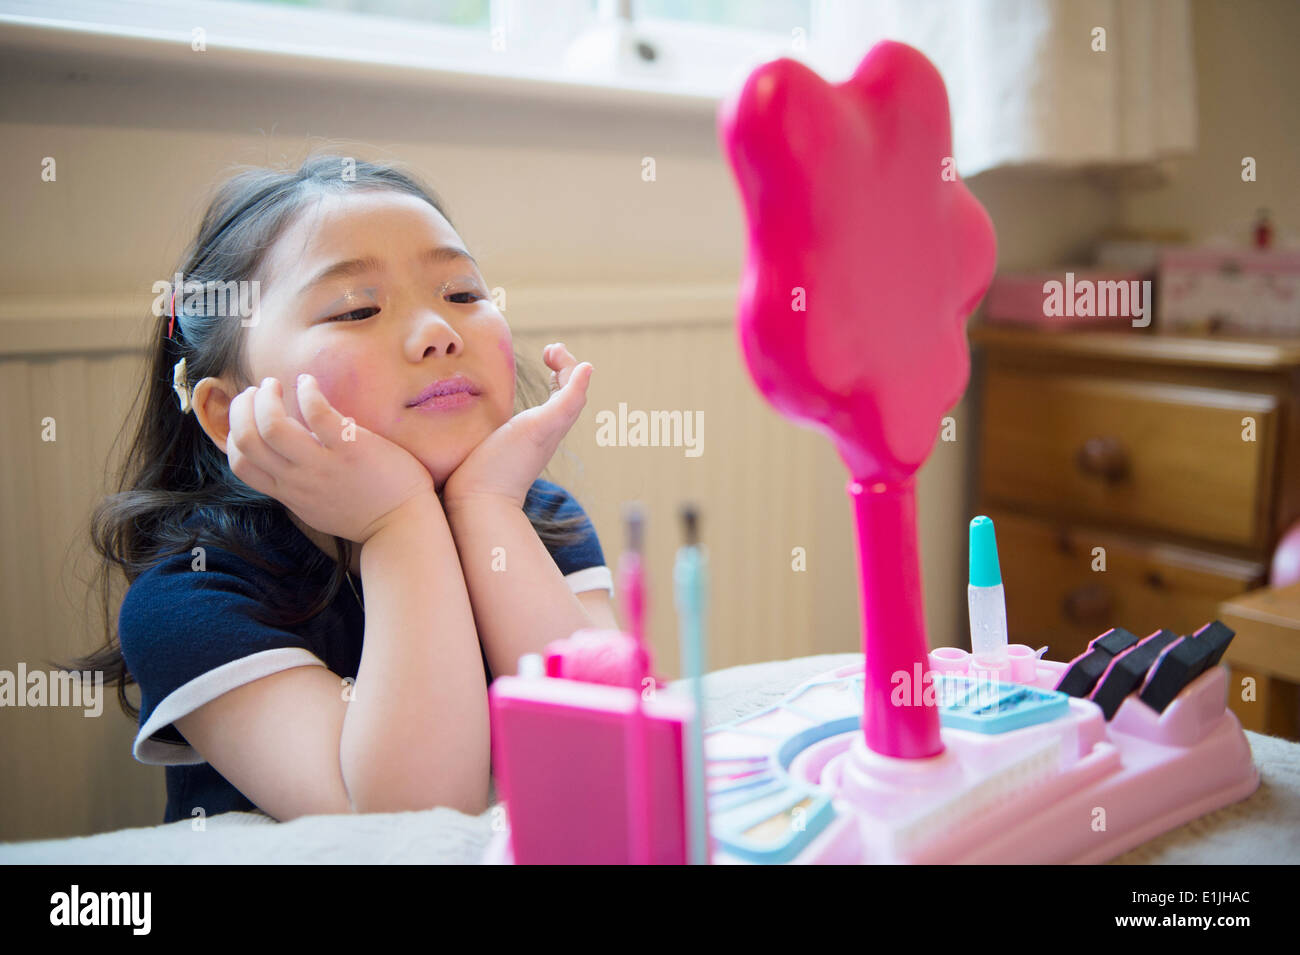 Girl putting make up on Stock Photo